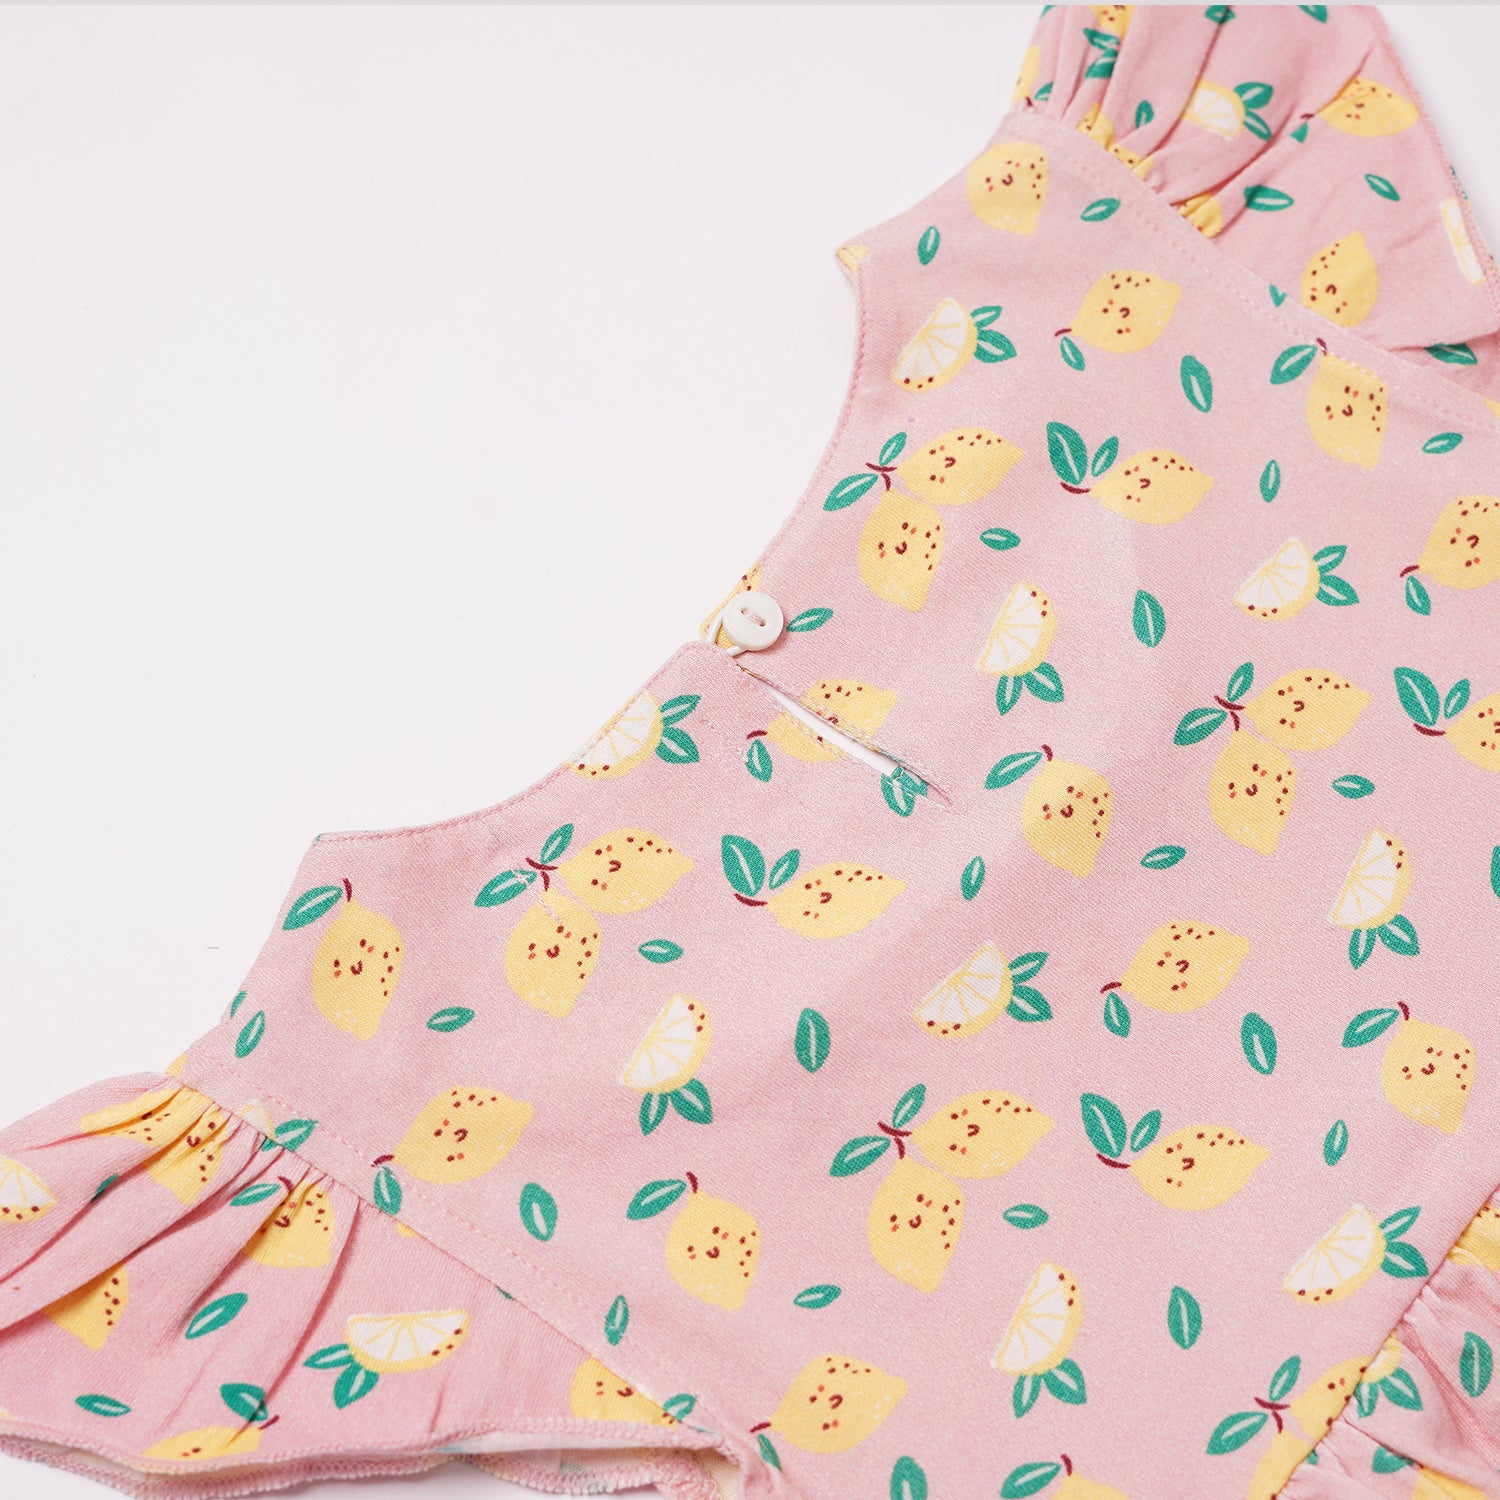 Summer Dress Lemon Print | Baby Girls Frock